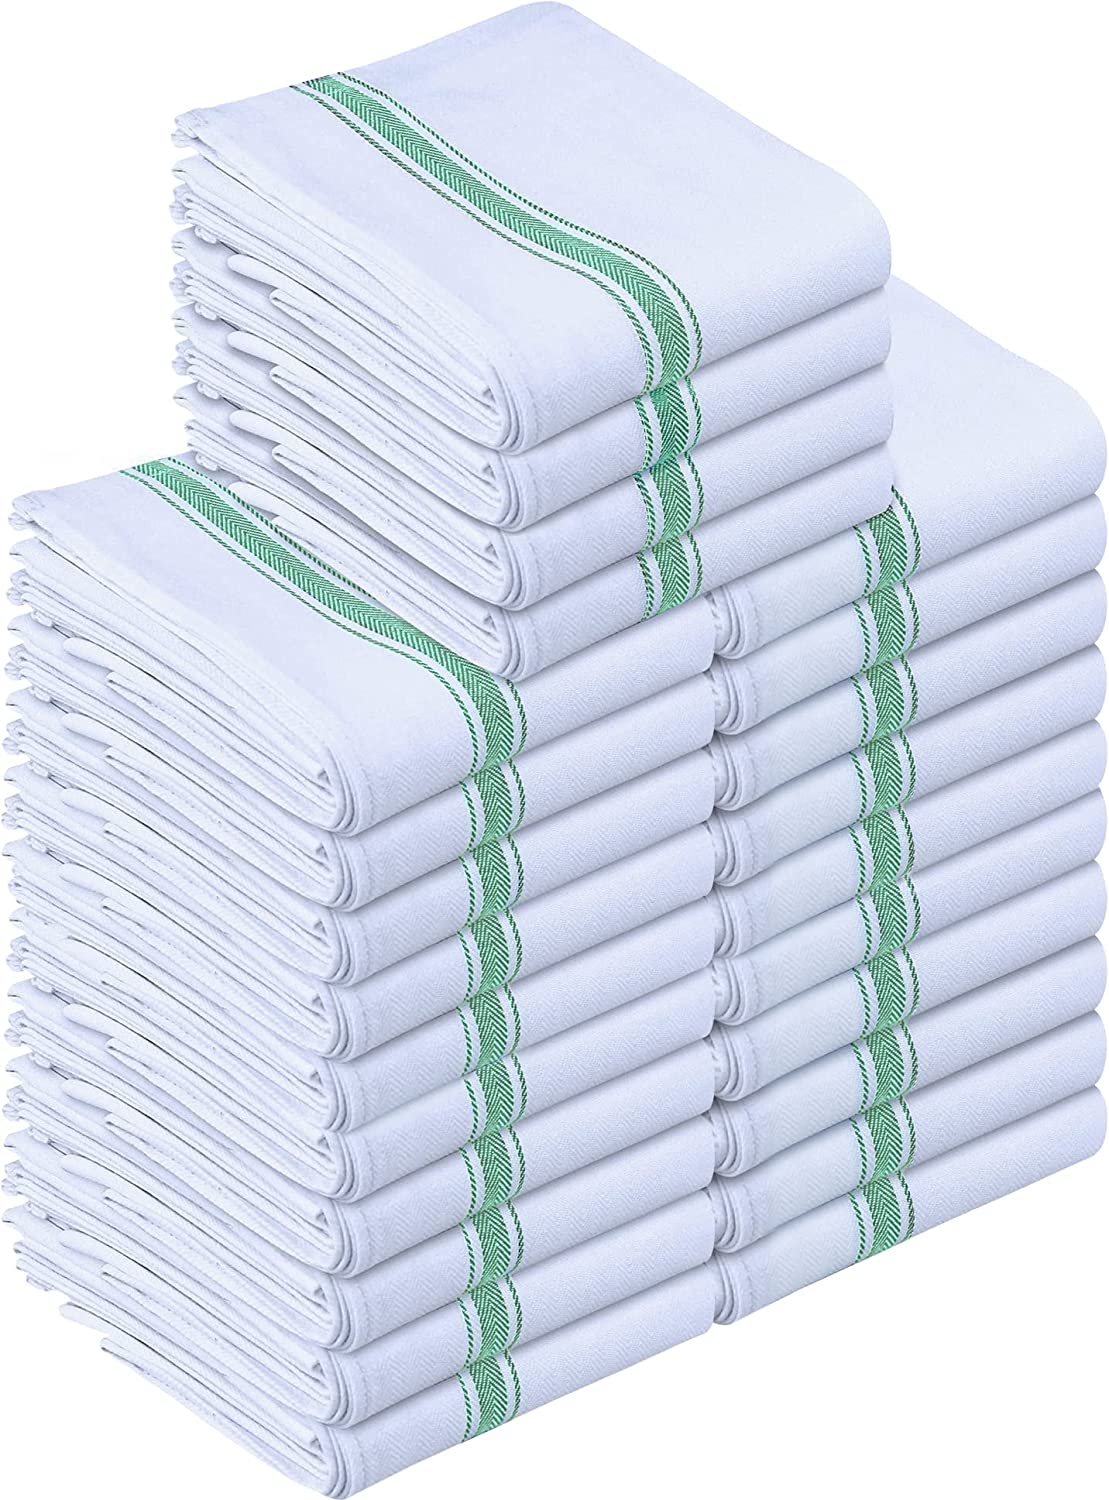  Utopia Towels Kitchen Towels, 15 x 25 Inches, 100